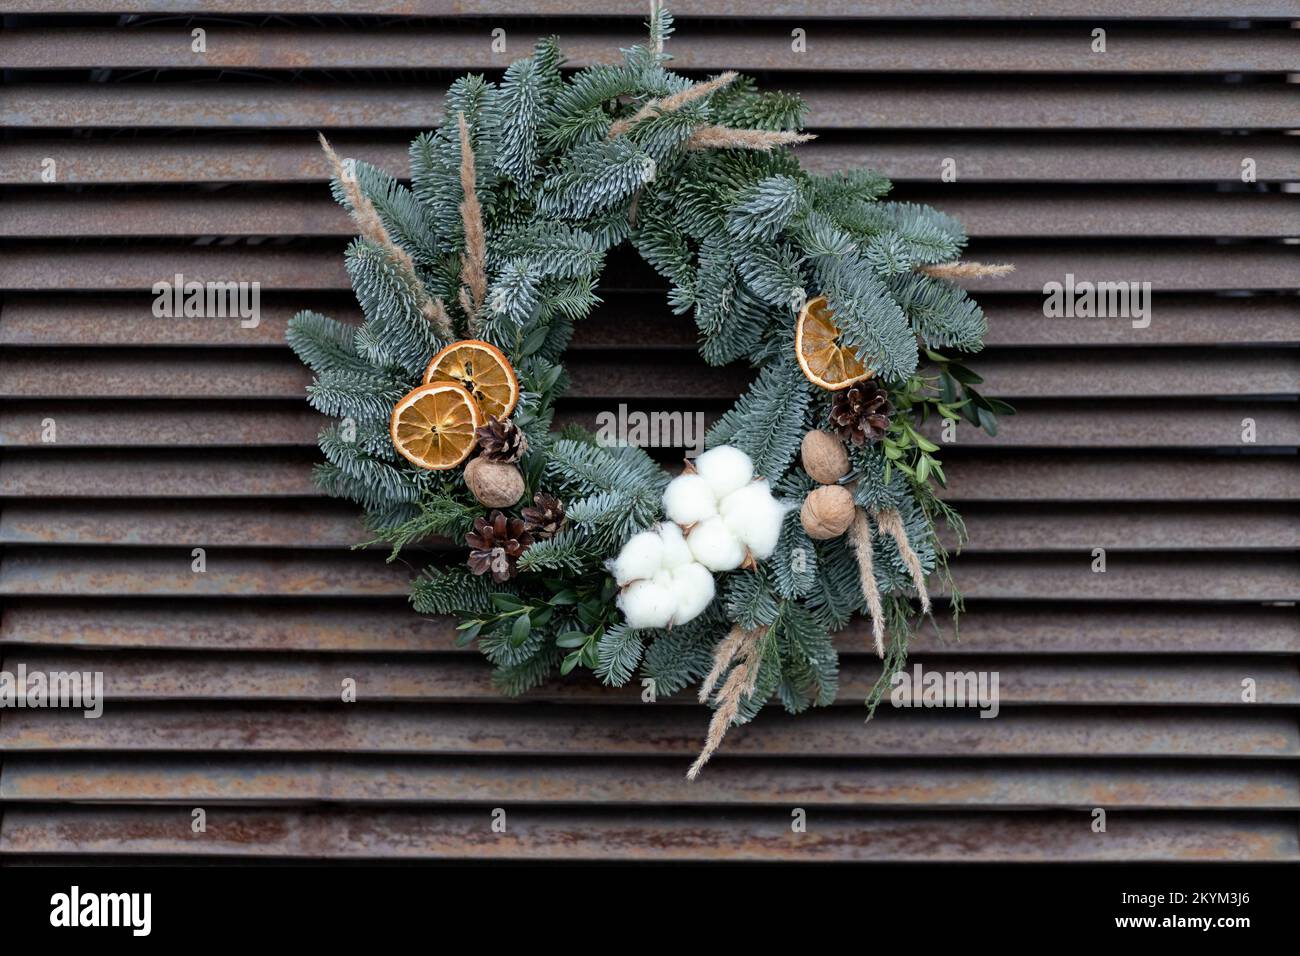 Winter Ribbon Wrap Wreath - Parkbench